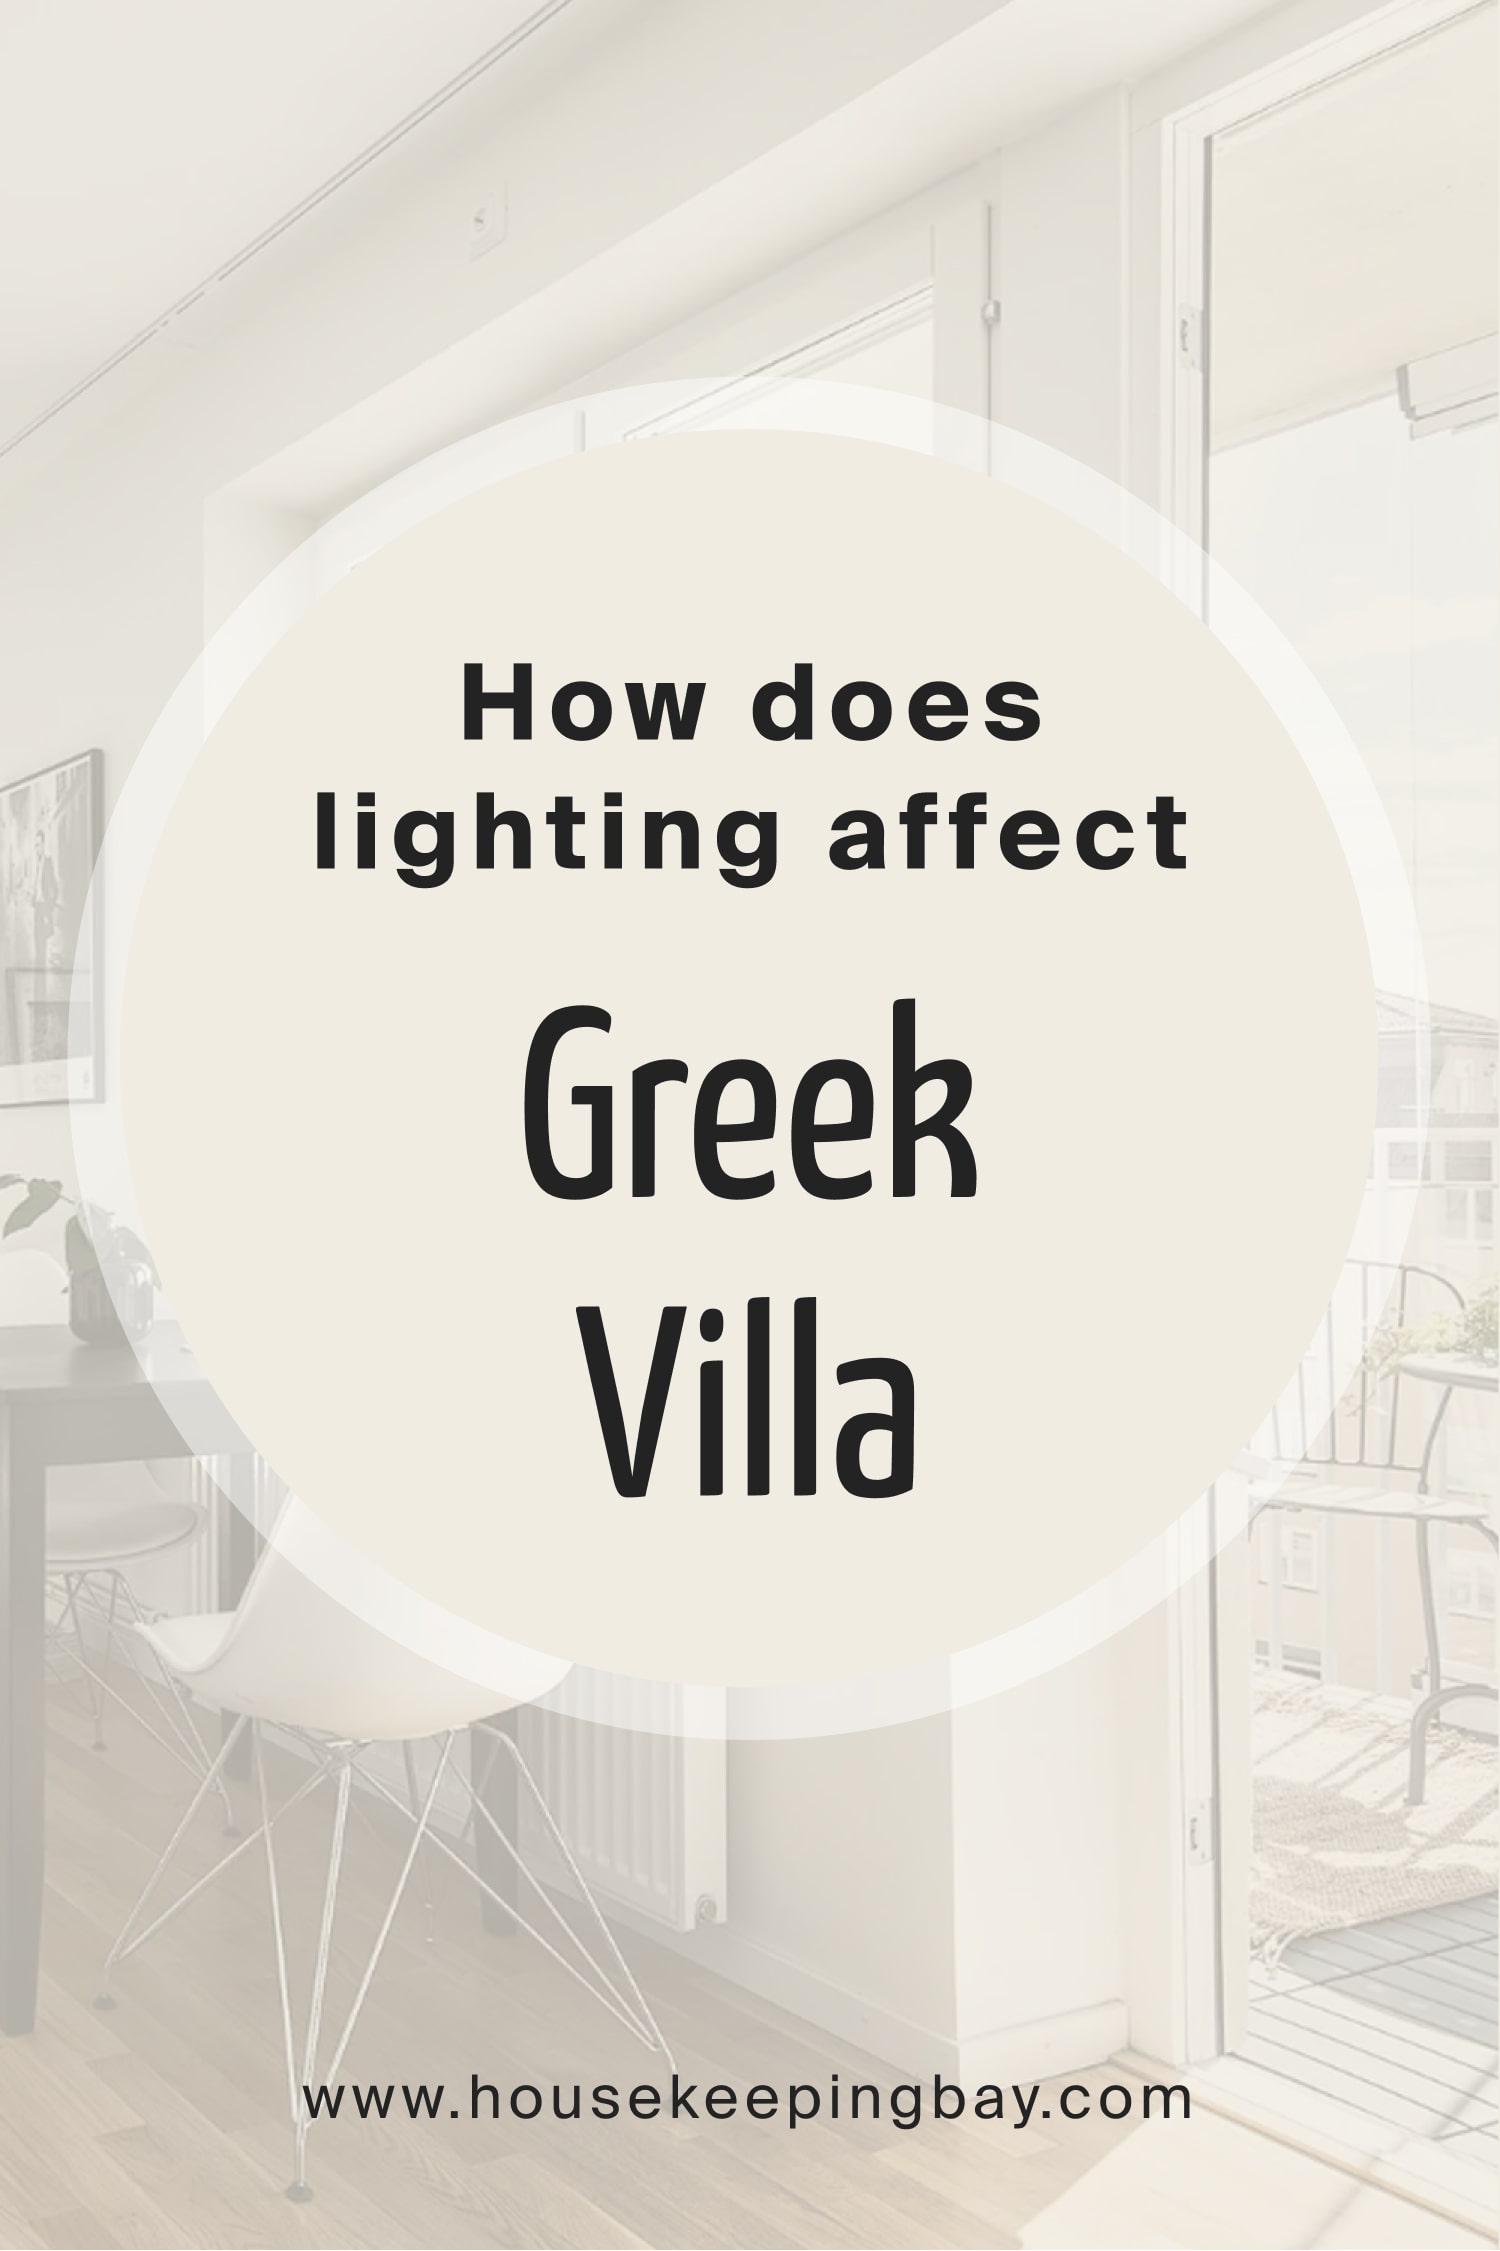 How does lighting affect Greek Villа